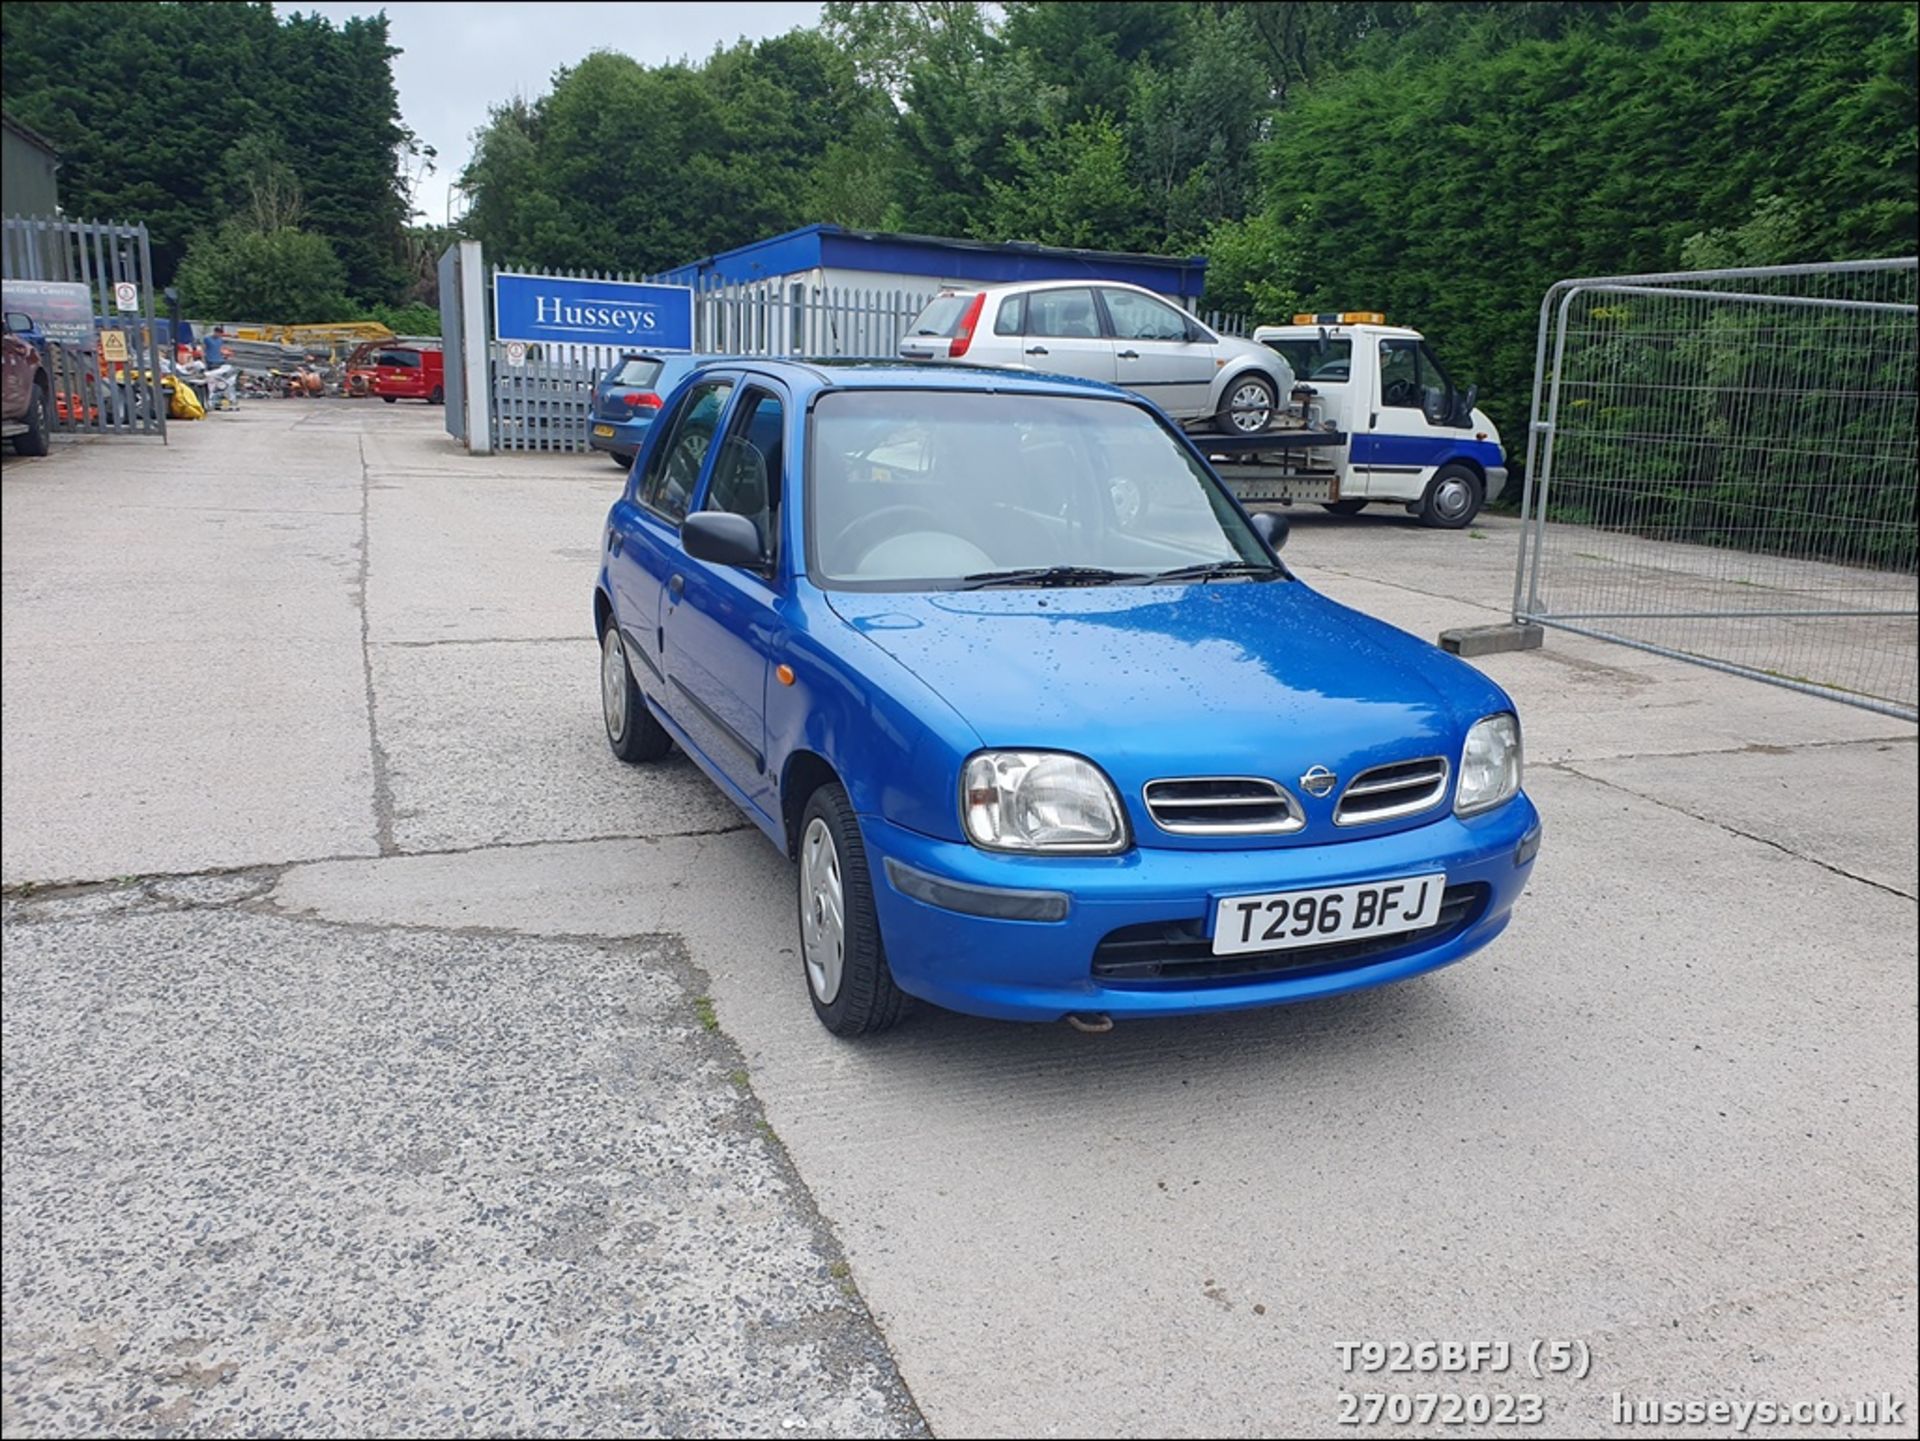 1999 NISSAN MICRA GX AUTO - 1275cc 5dr Hatchback (Blue) - Image 6 of 47